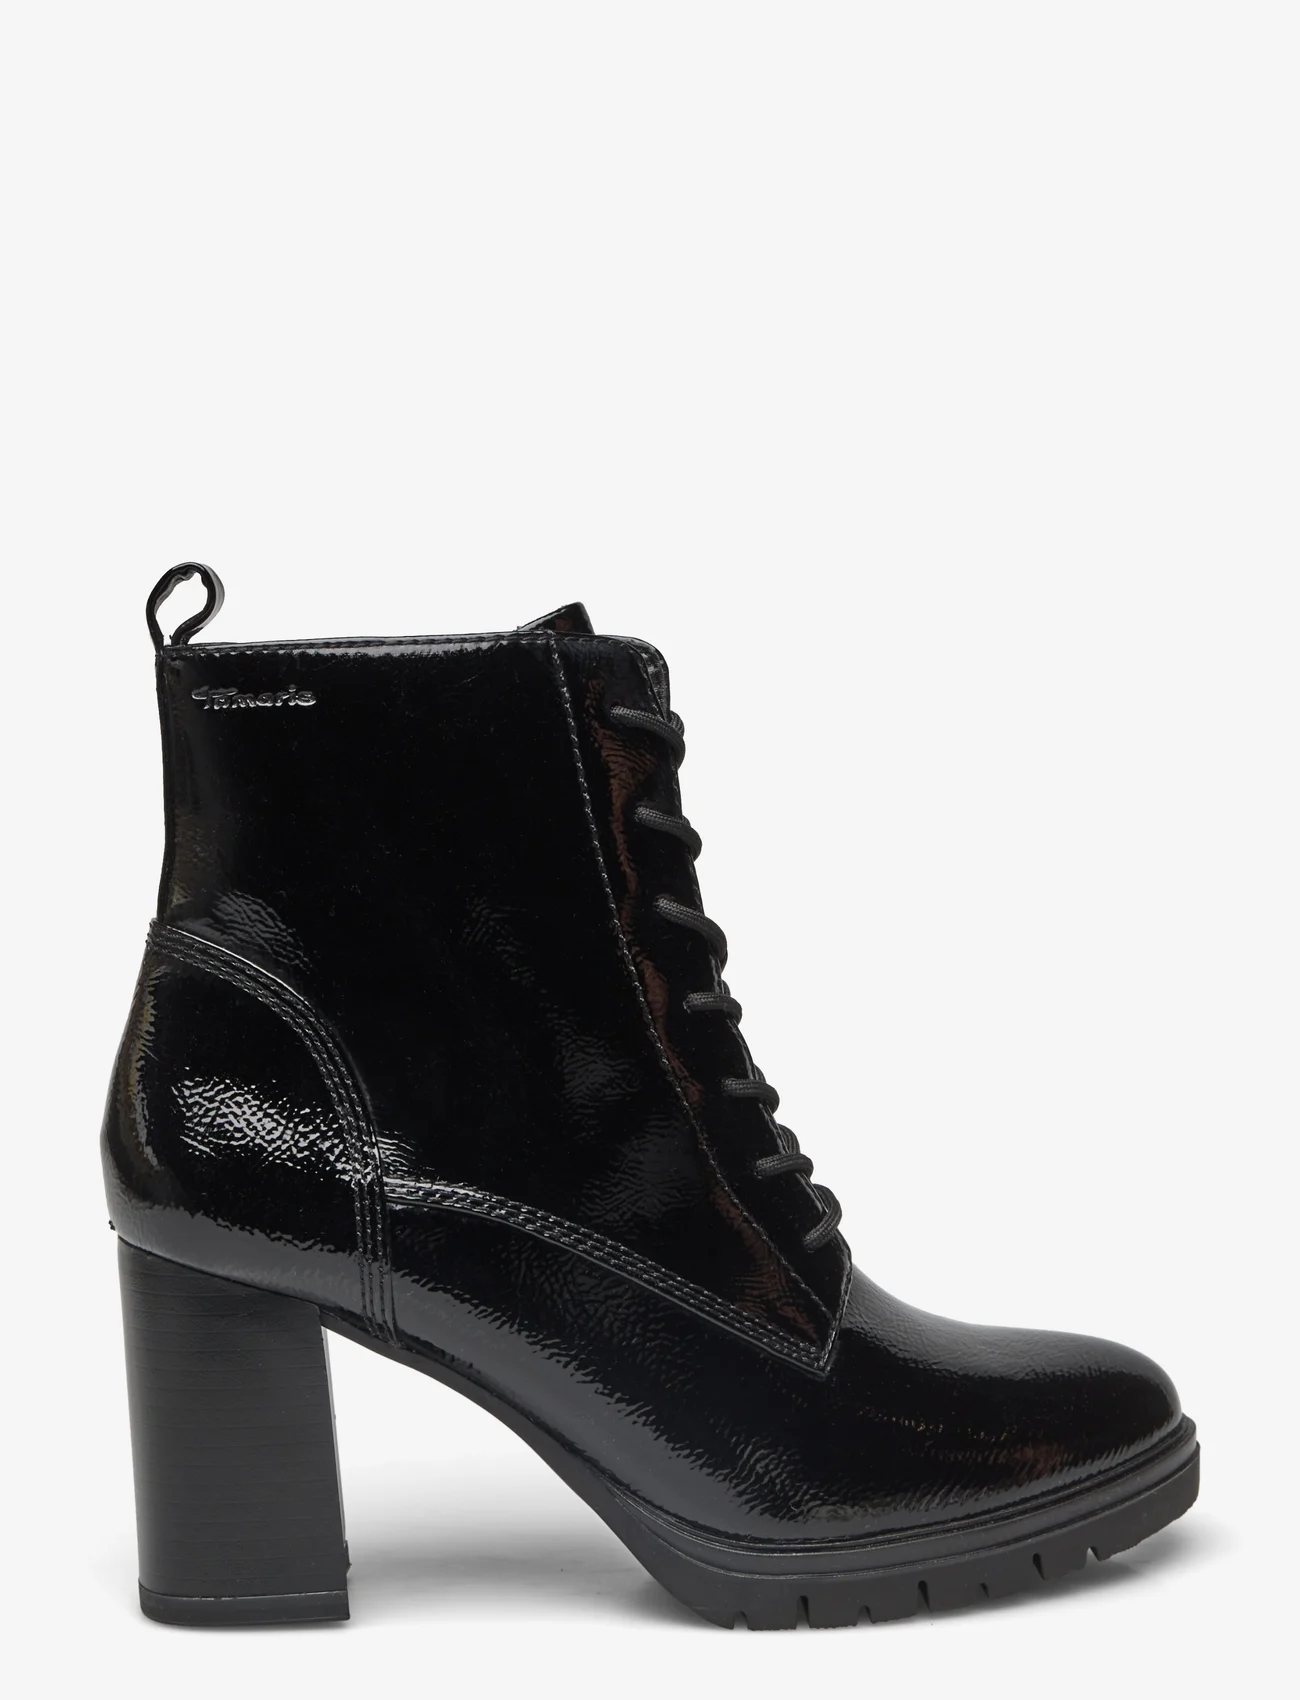 Tamaris - Women Boots - high heel - black patent - 1